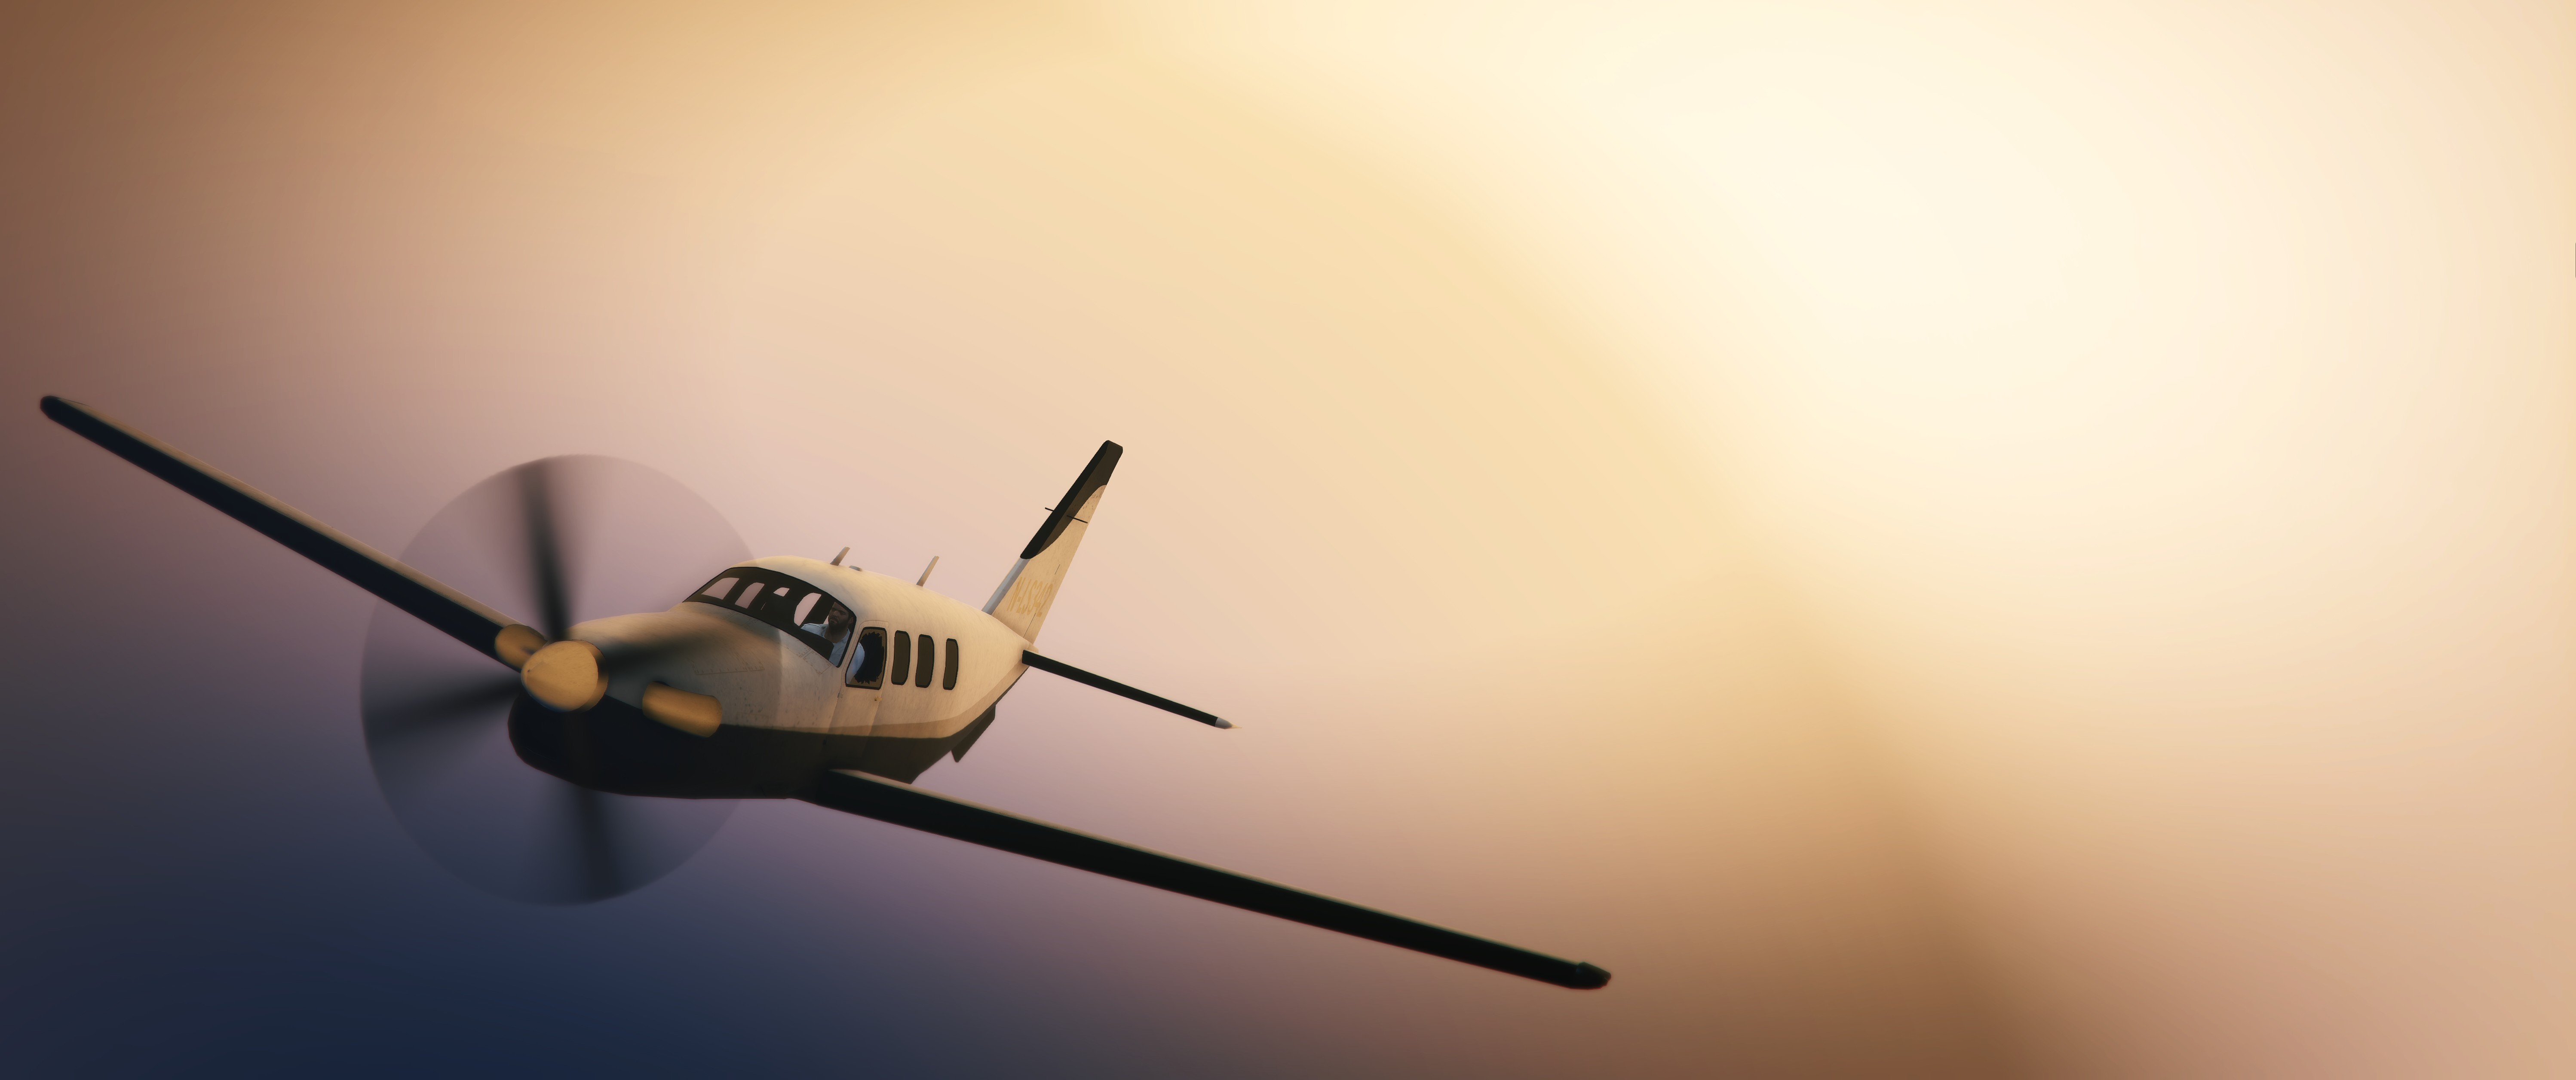 General 5992x2513 airplane video games Grand Theft Auto V Grand Theft Auto aircraft screen shot PC gaming Michael De Santa